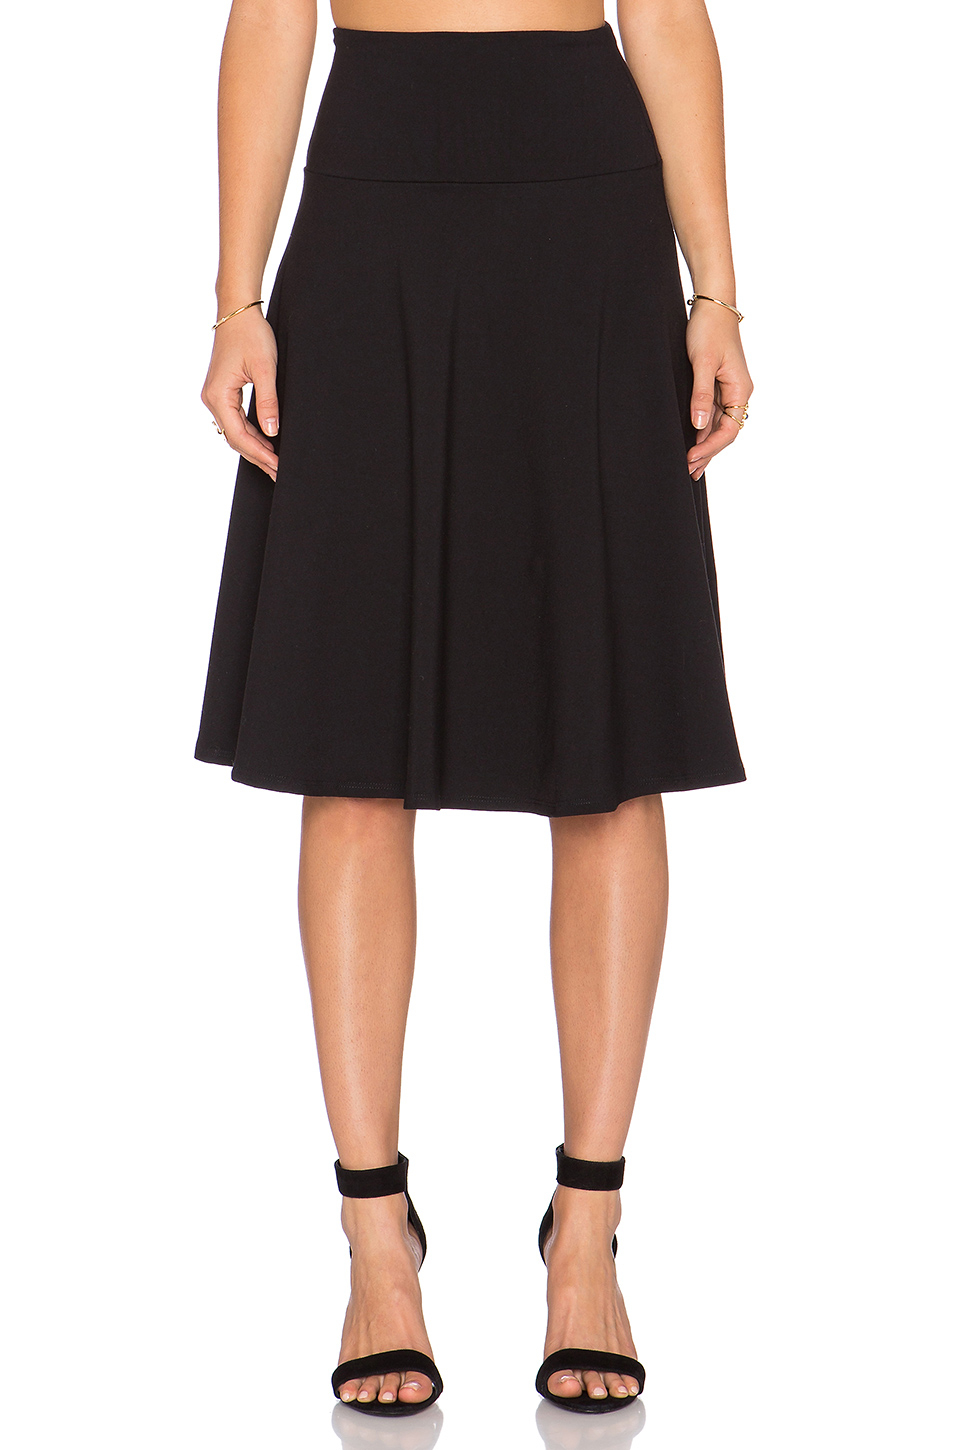 Susana Monaco Synthetic High Waist Flared Skirt in Black - Lyst